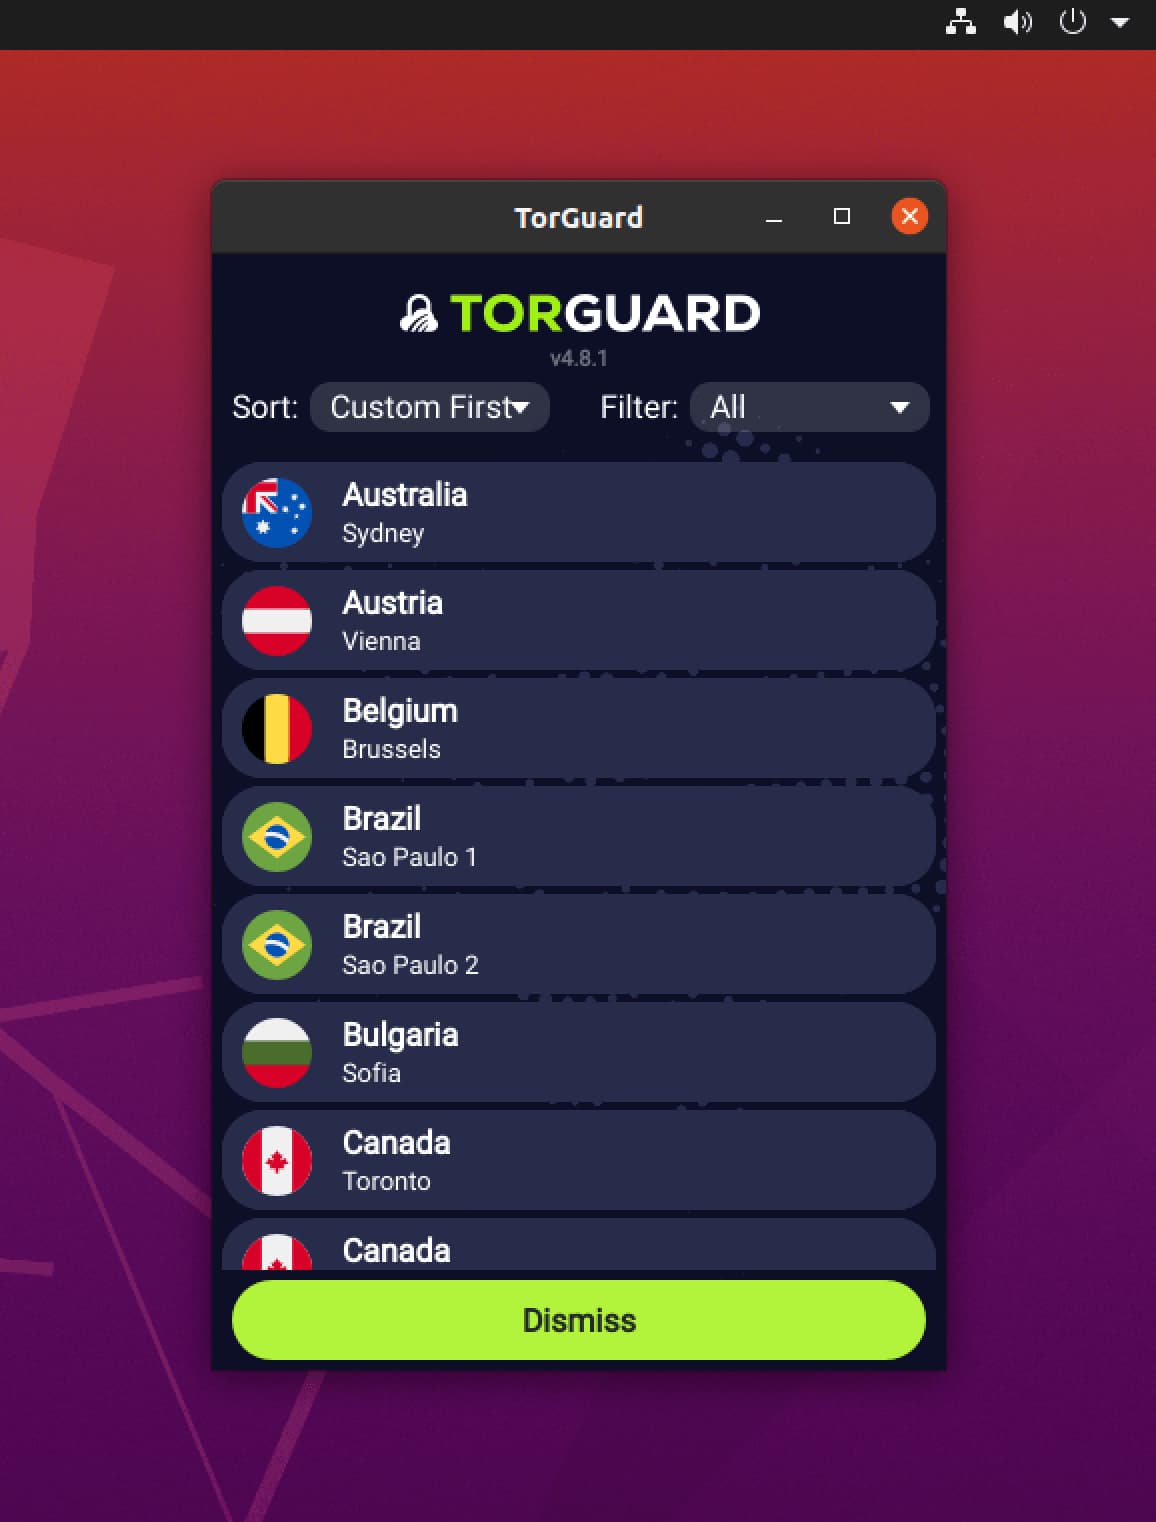 TorGuard VPN app home screen on Linux